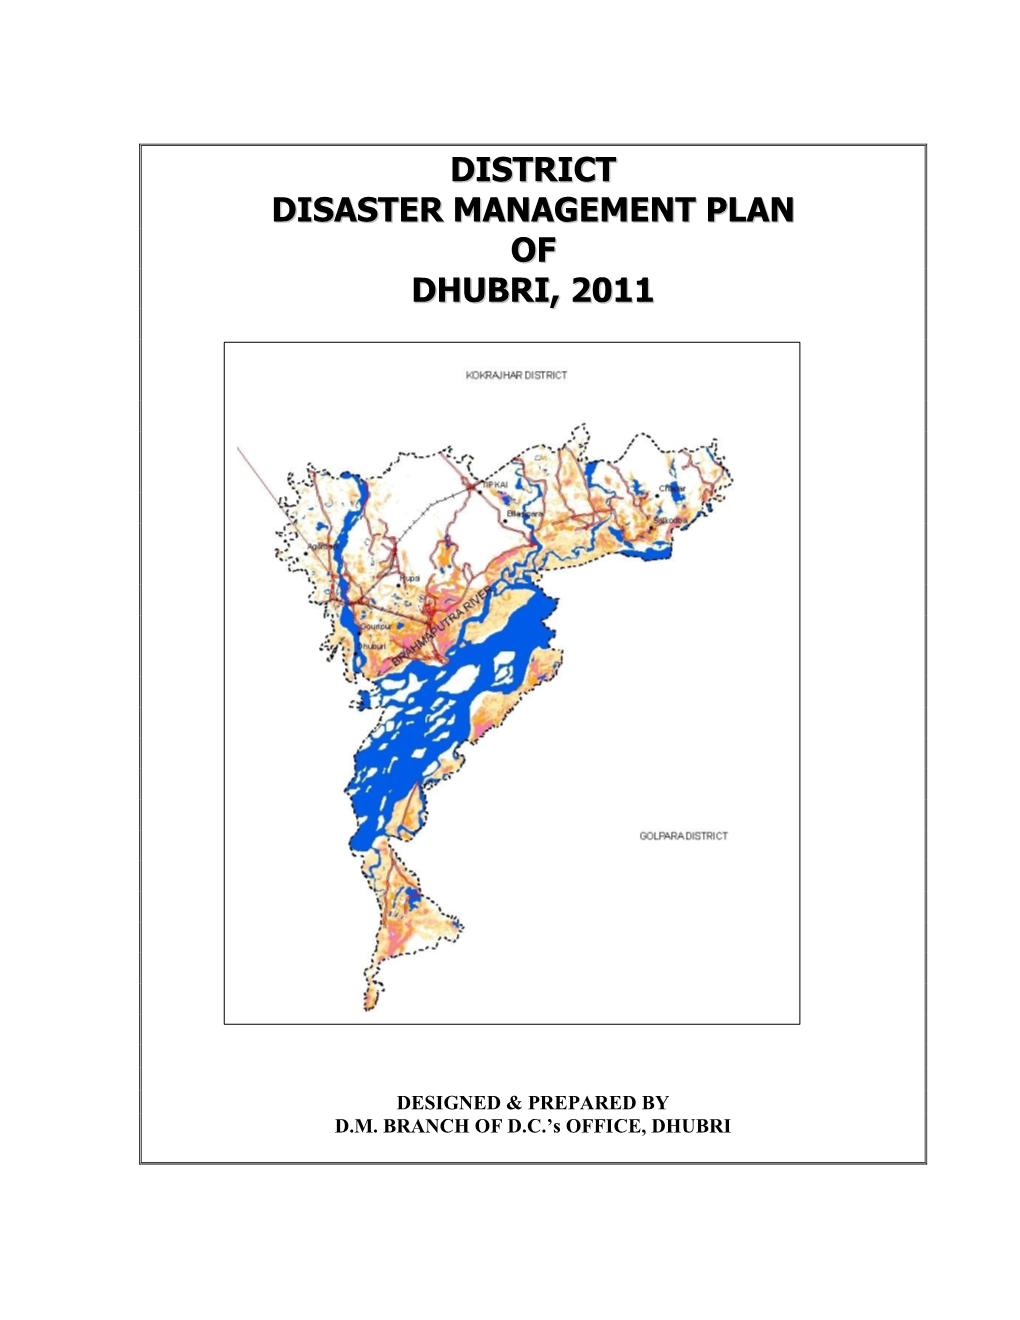 District Disaster Management Plan of Dhubri, 2011